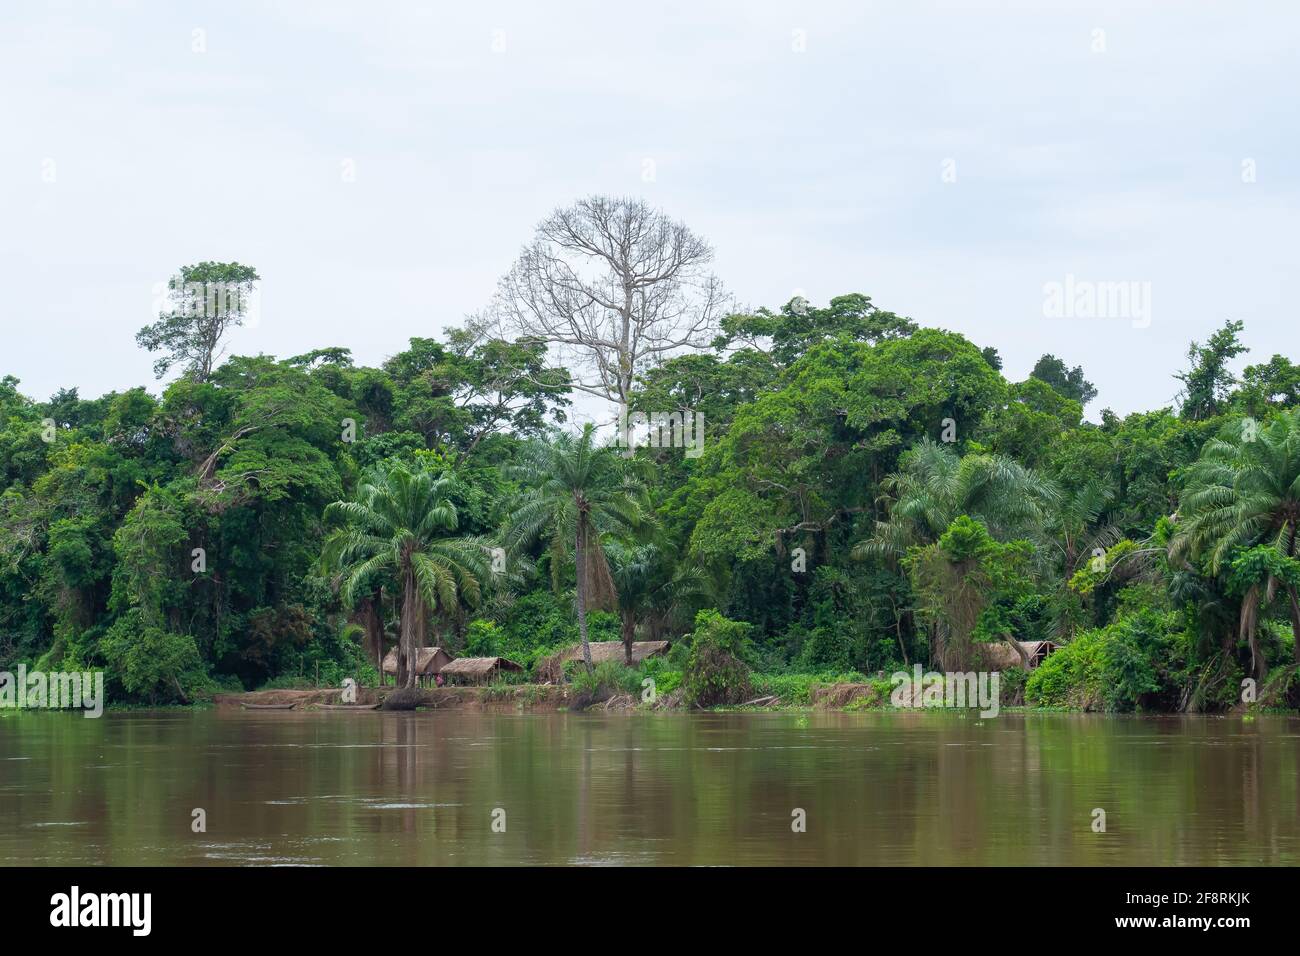 Ruhe im Dorf, Kongo-Fluss, Demokratische Republik Kongo Stockfoto